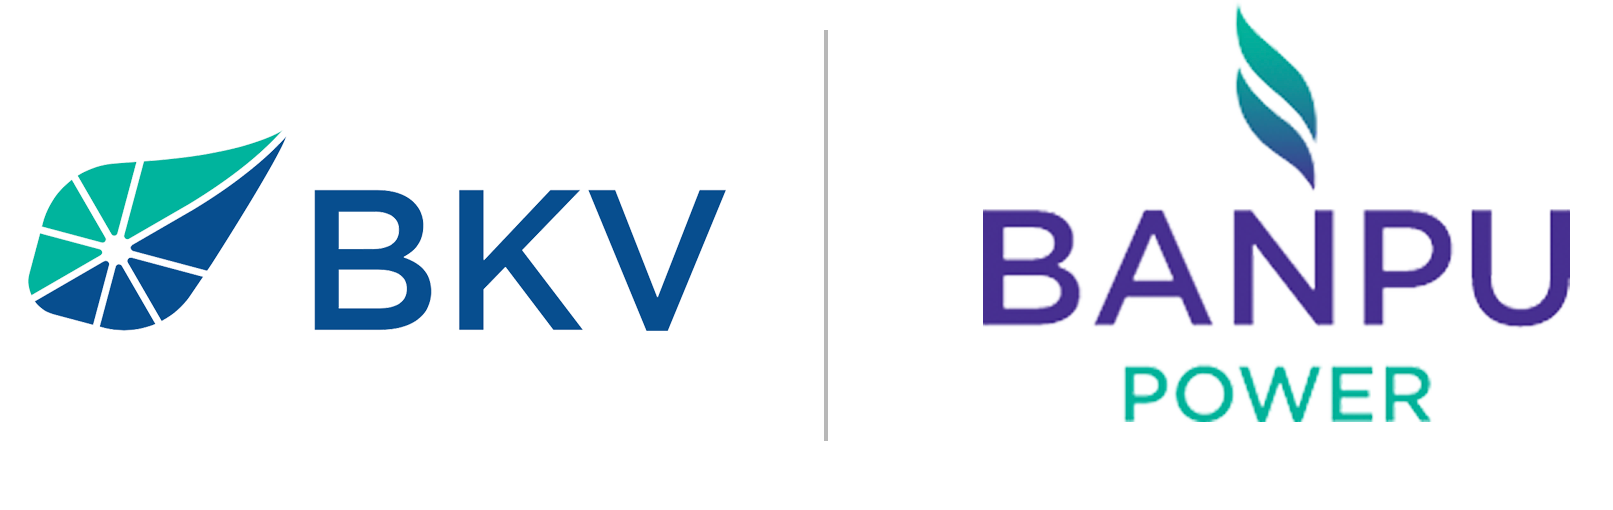 BKV Corporation and Banpu Power Logos